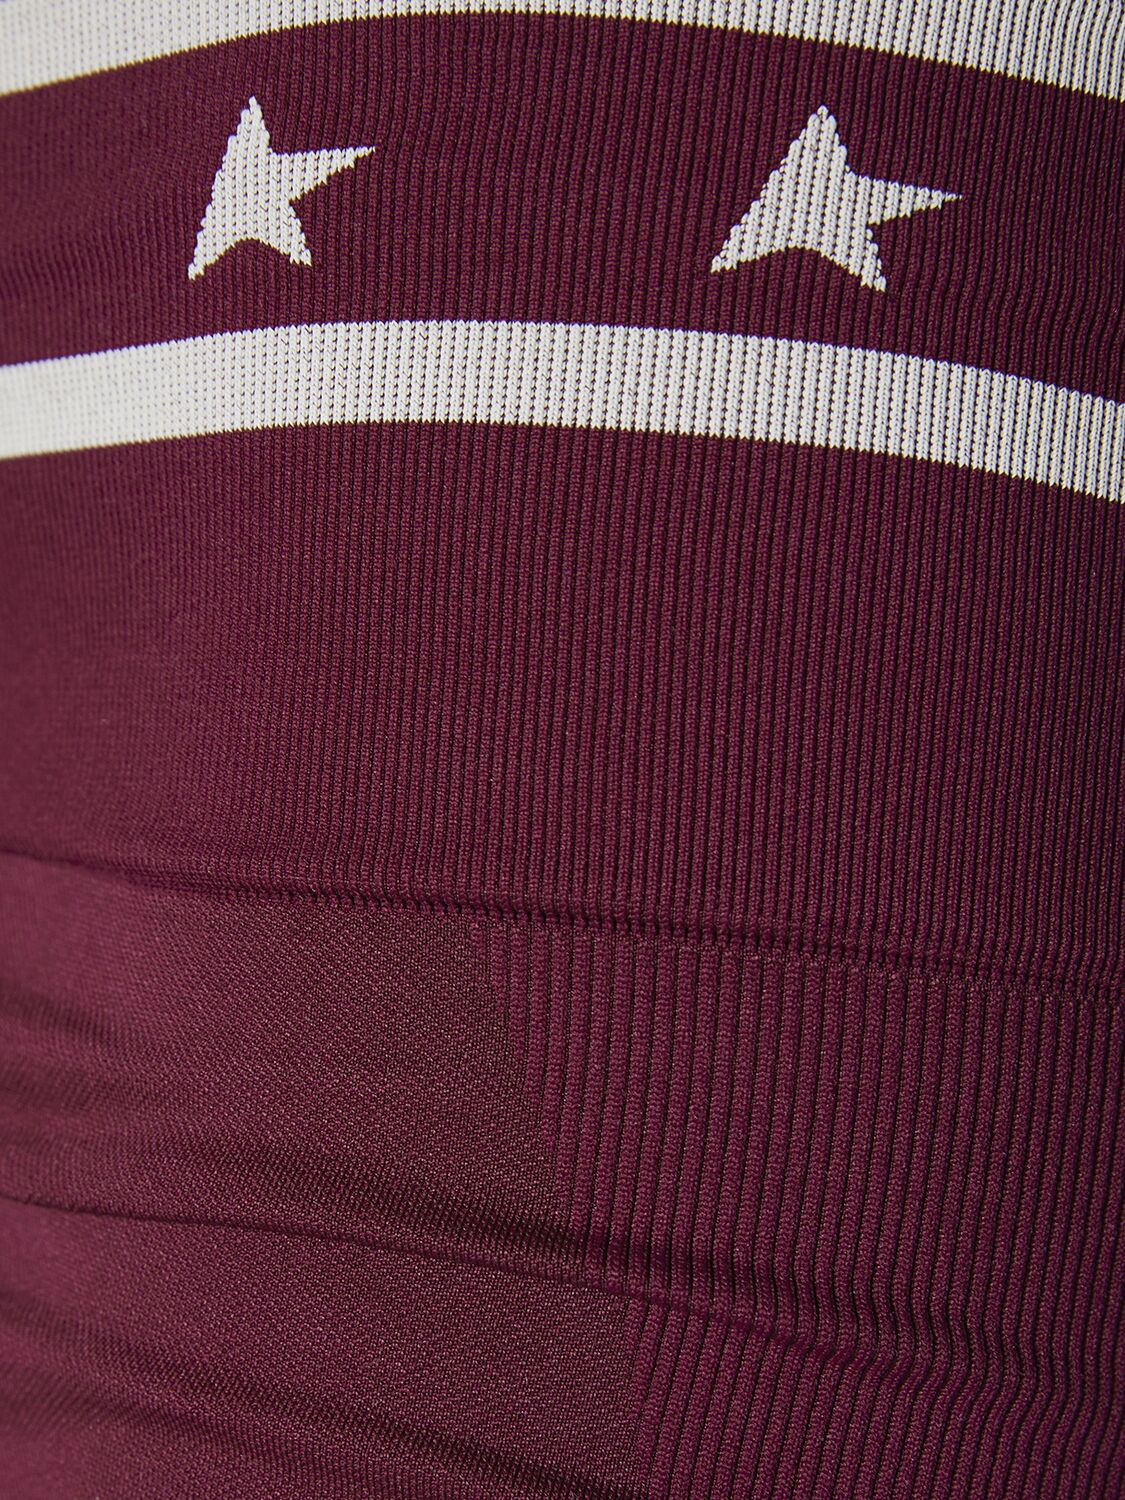 STAR科技织物紧身裤